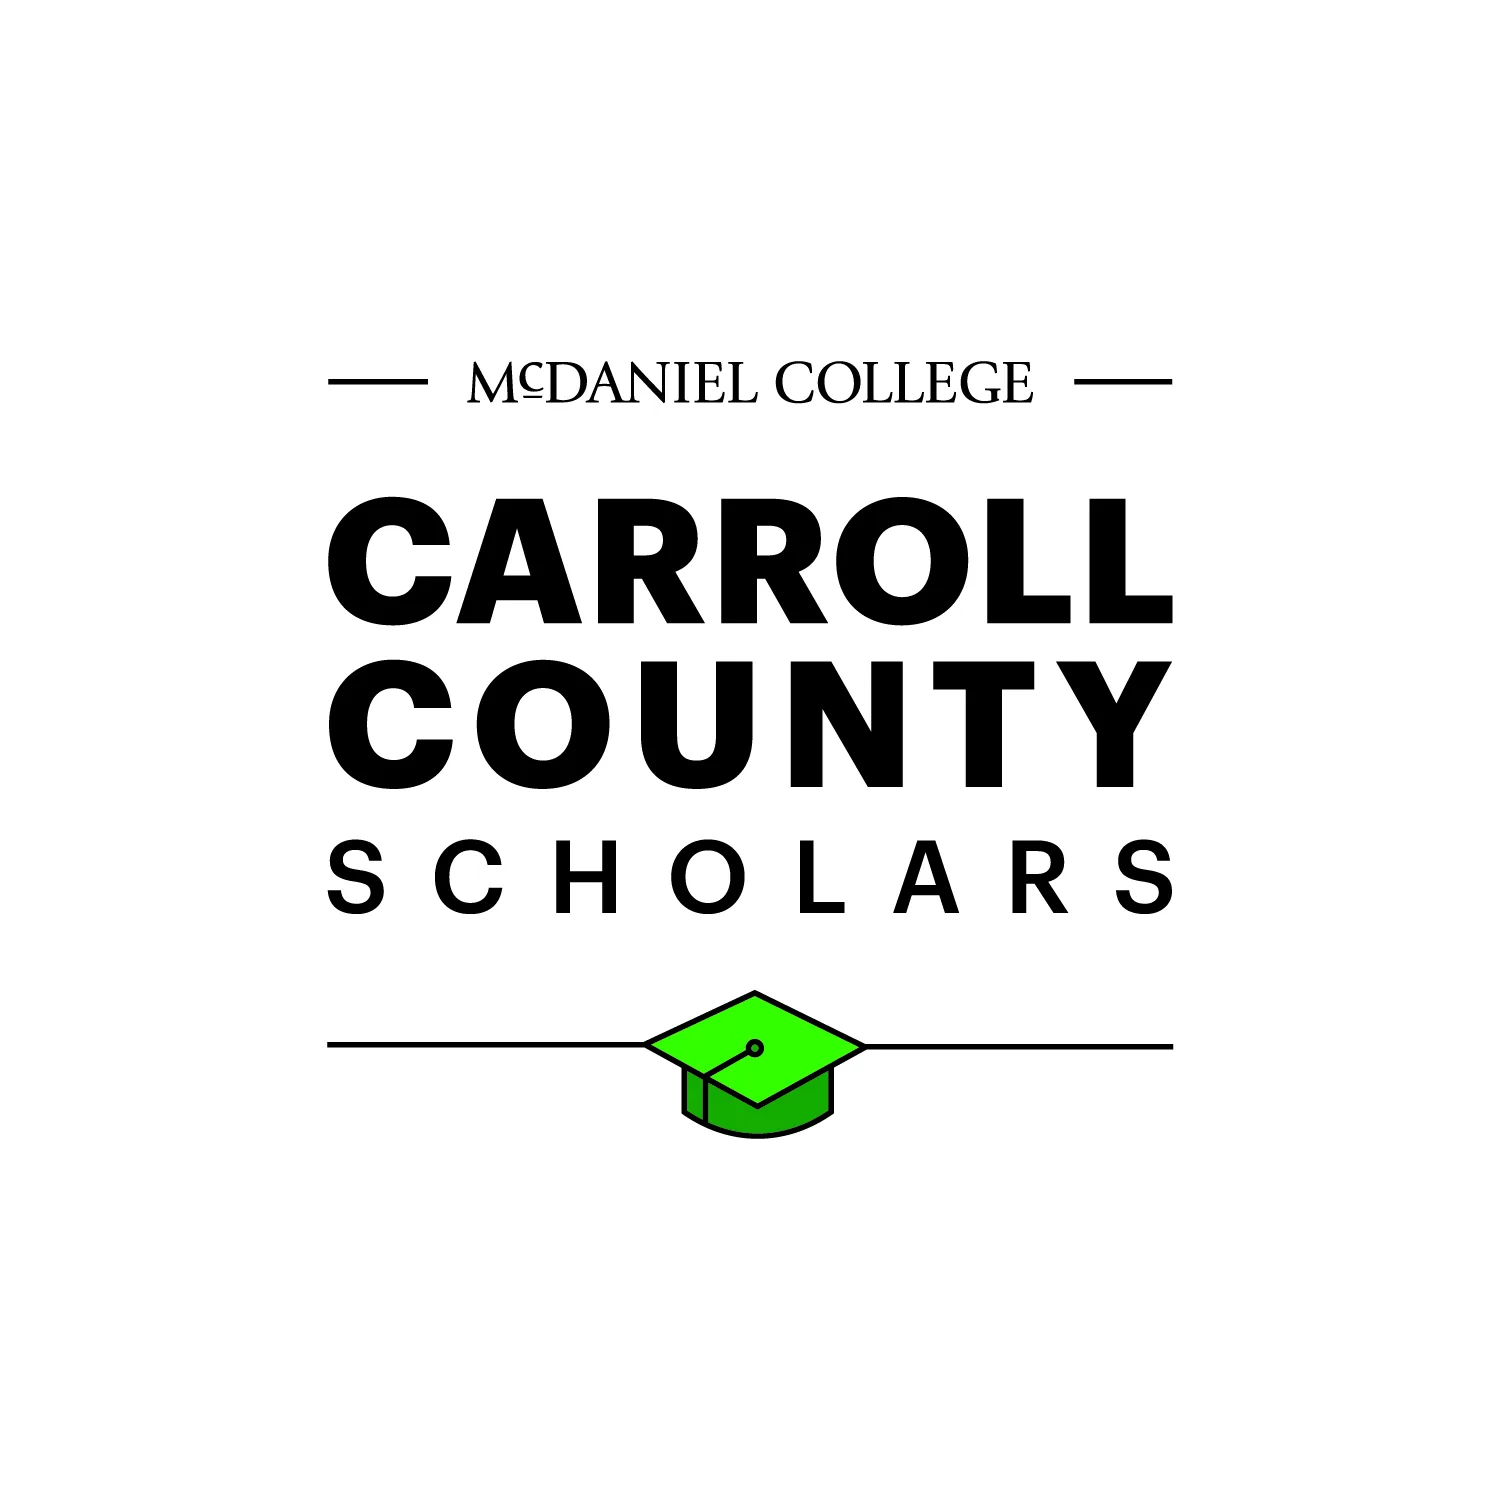 mcdaniel college carroll county scholars